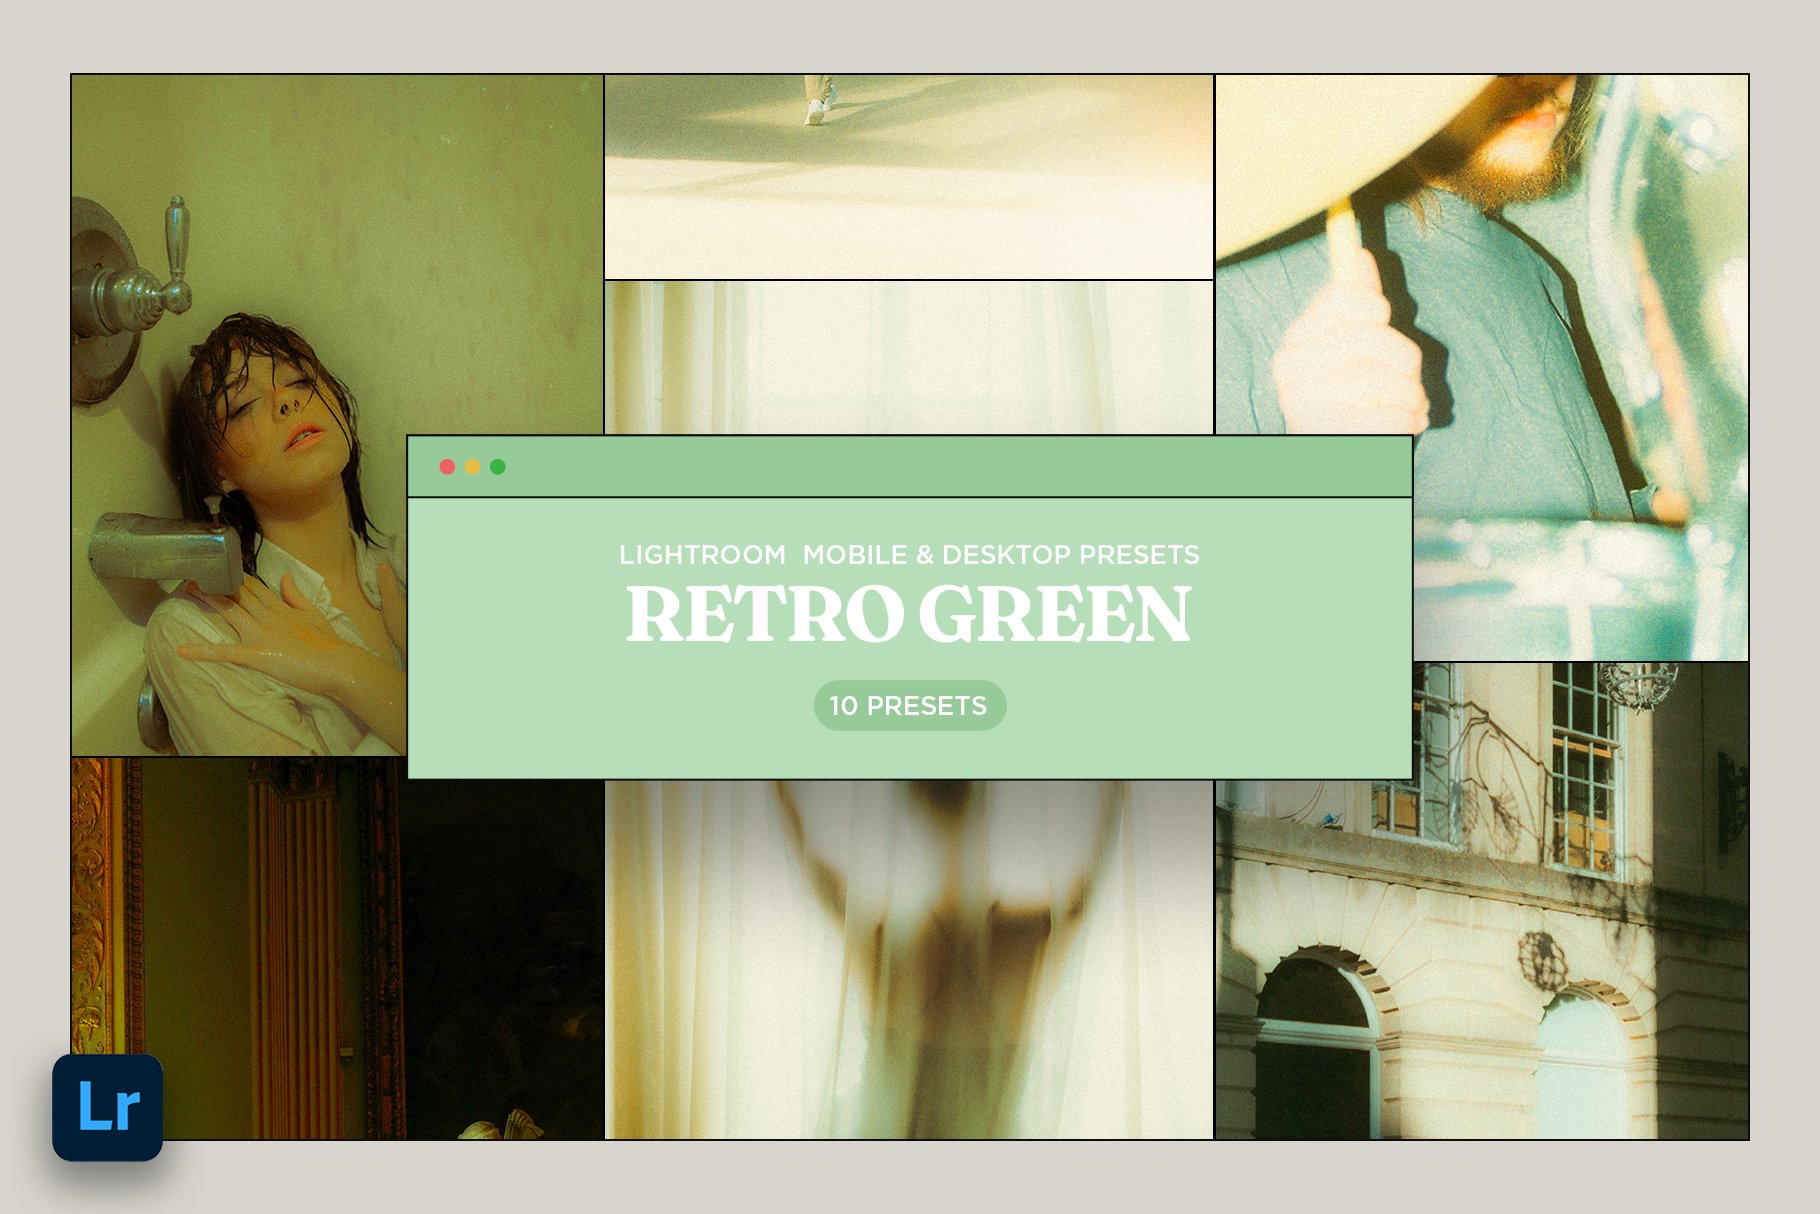 Retro Green Lightroom Presetscover image.